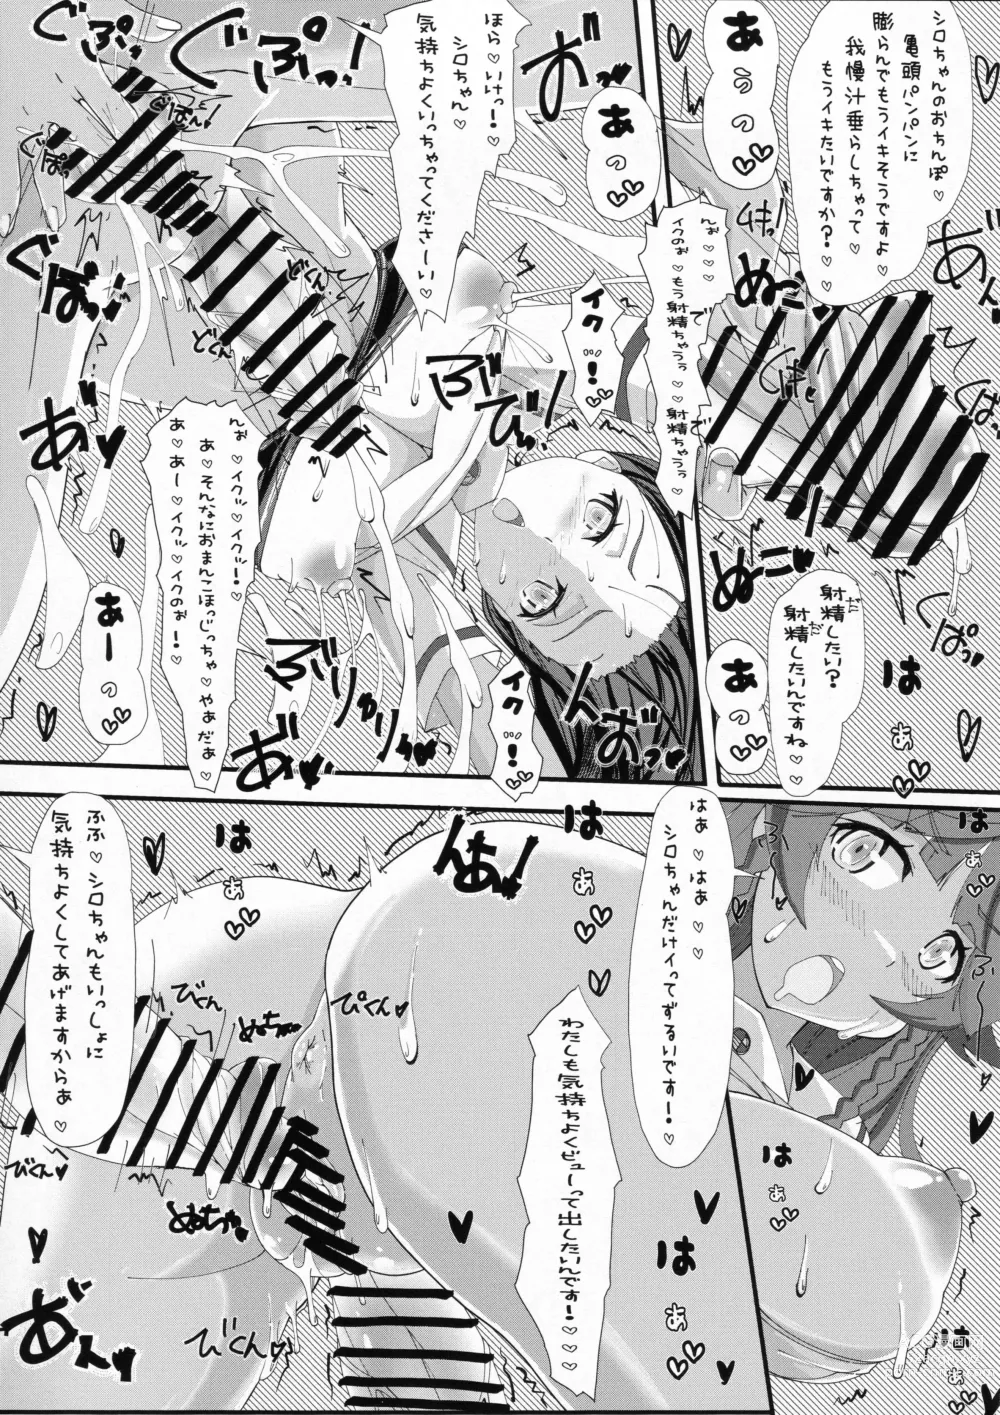 Page 8 of doujinshi Hae furi spirits mod.6.0